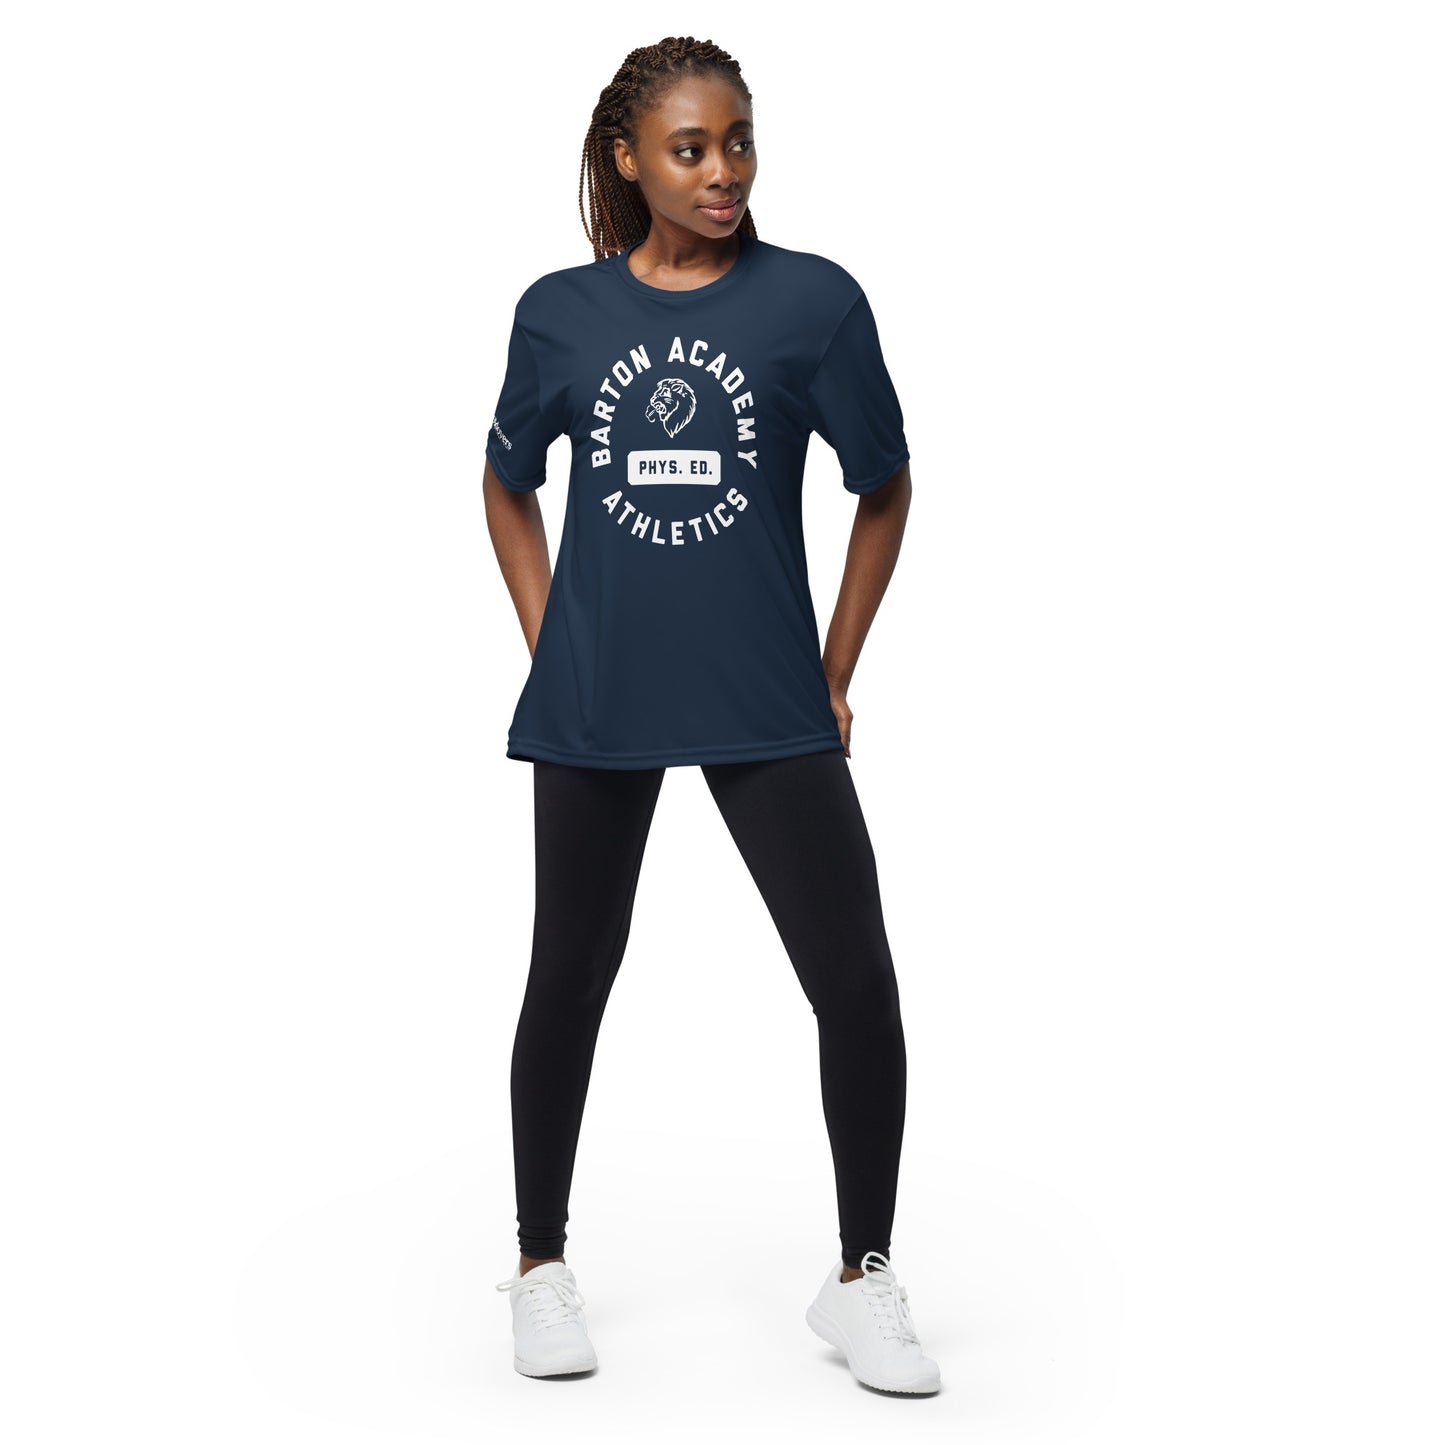 The Holdovers Barton Academy Athletics T-Shirt